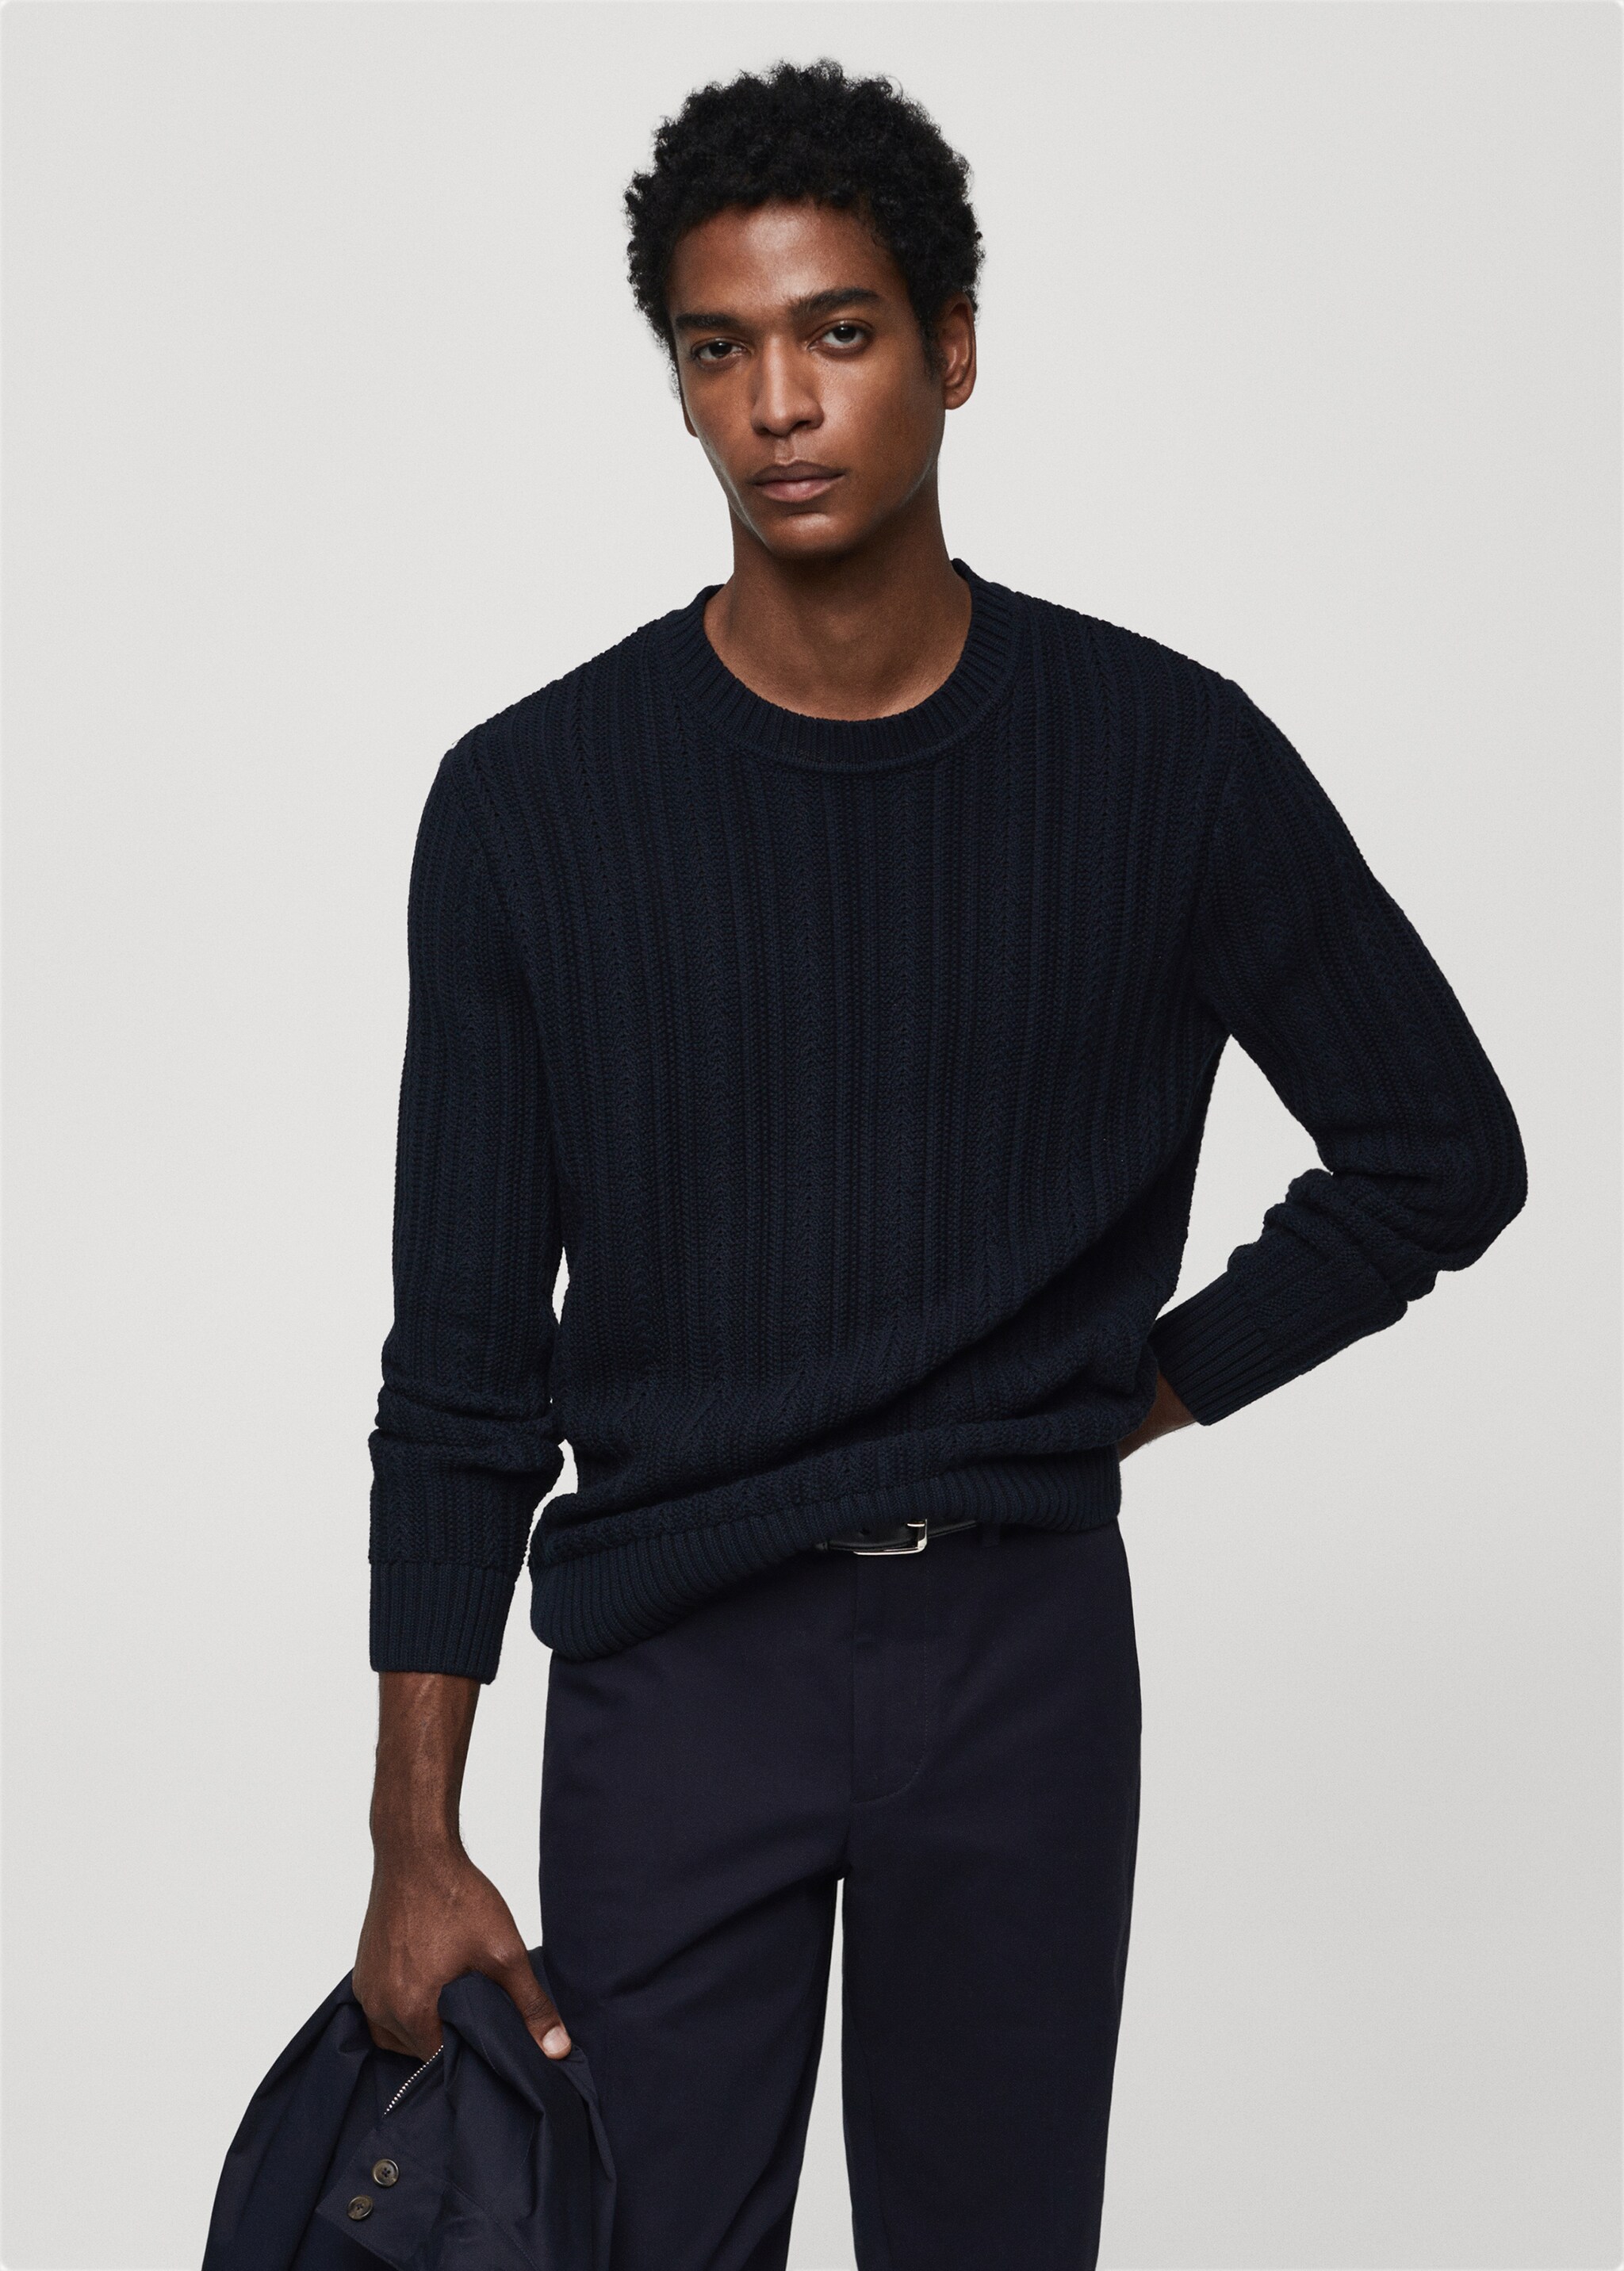 Contrasting knit sweater - Medium plane